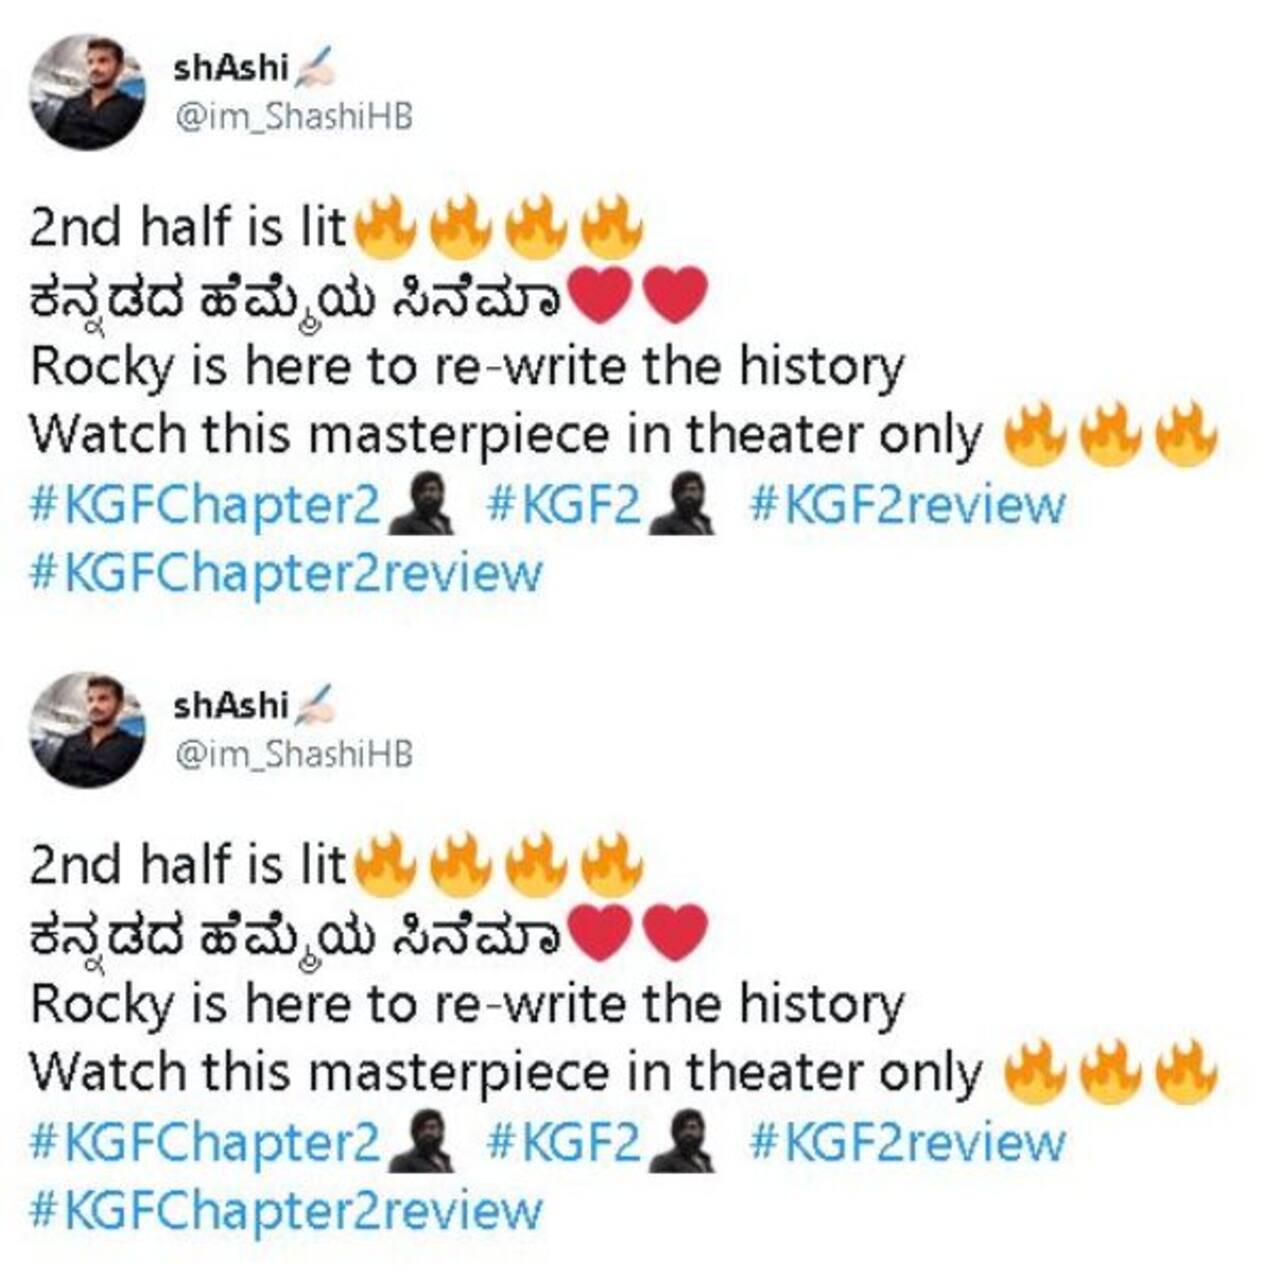 KGF Chapter 2 – Masterpiece